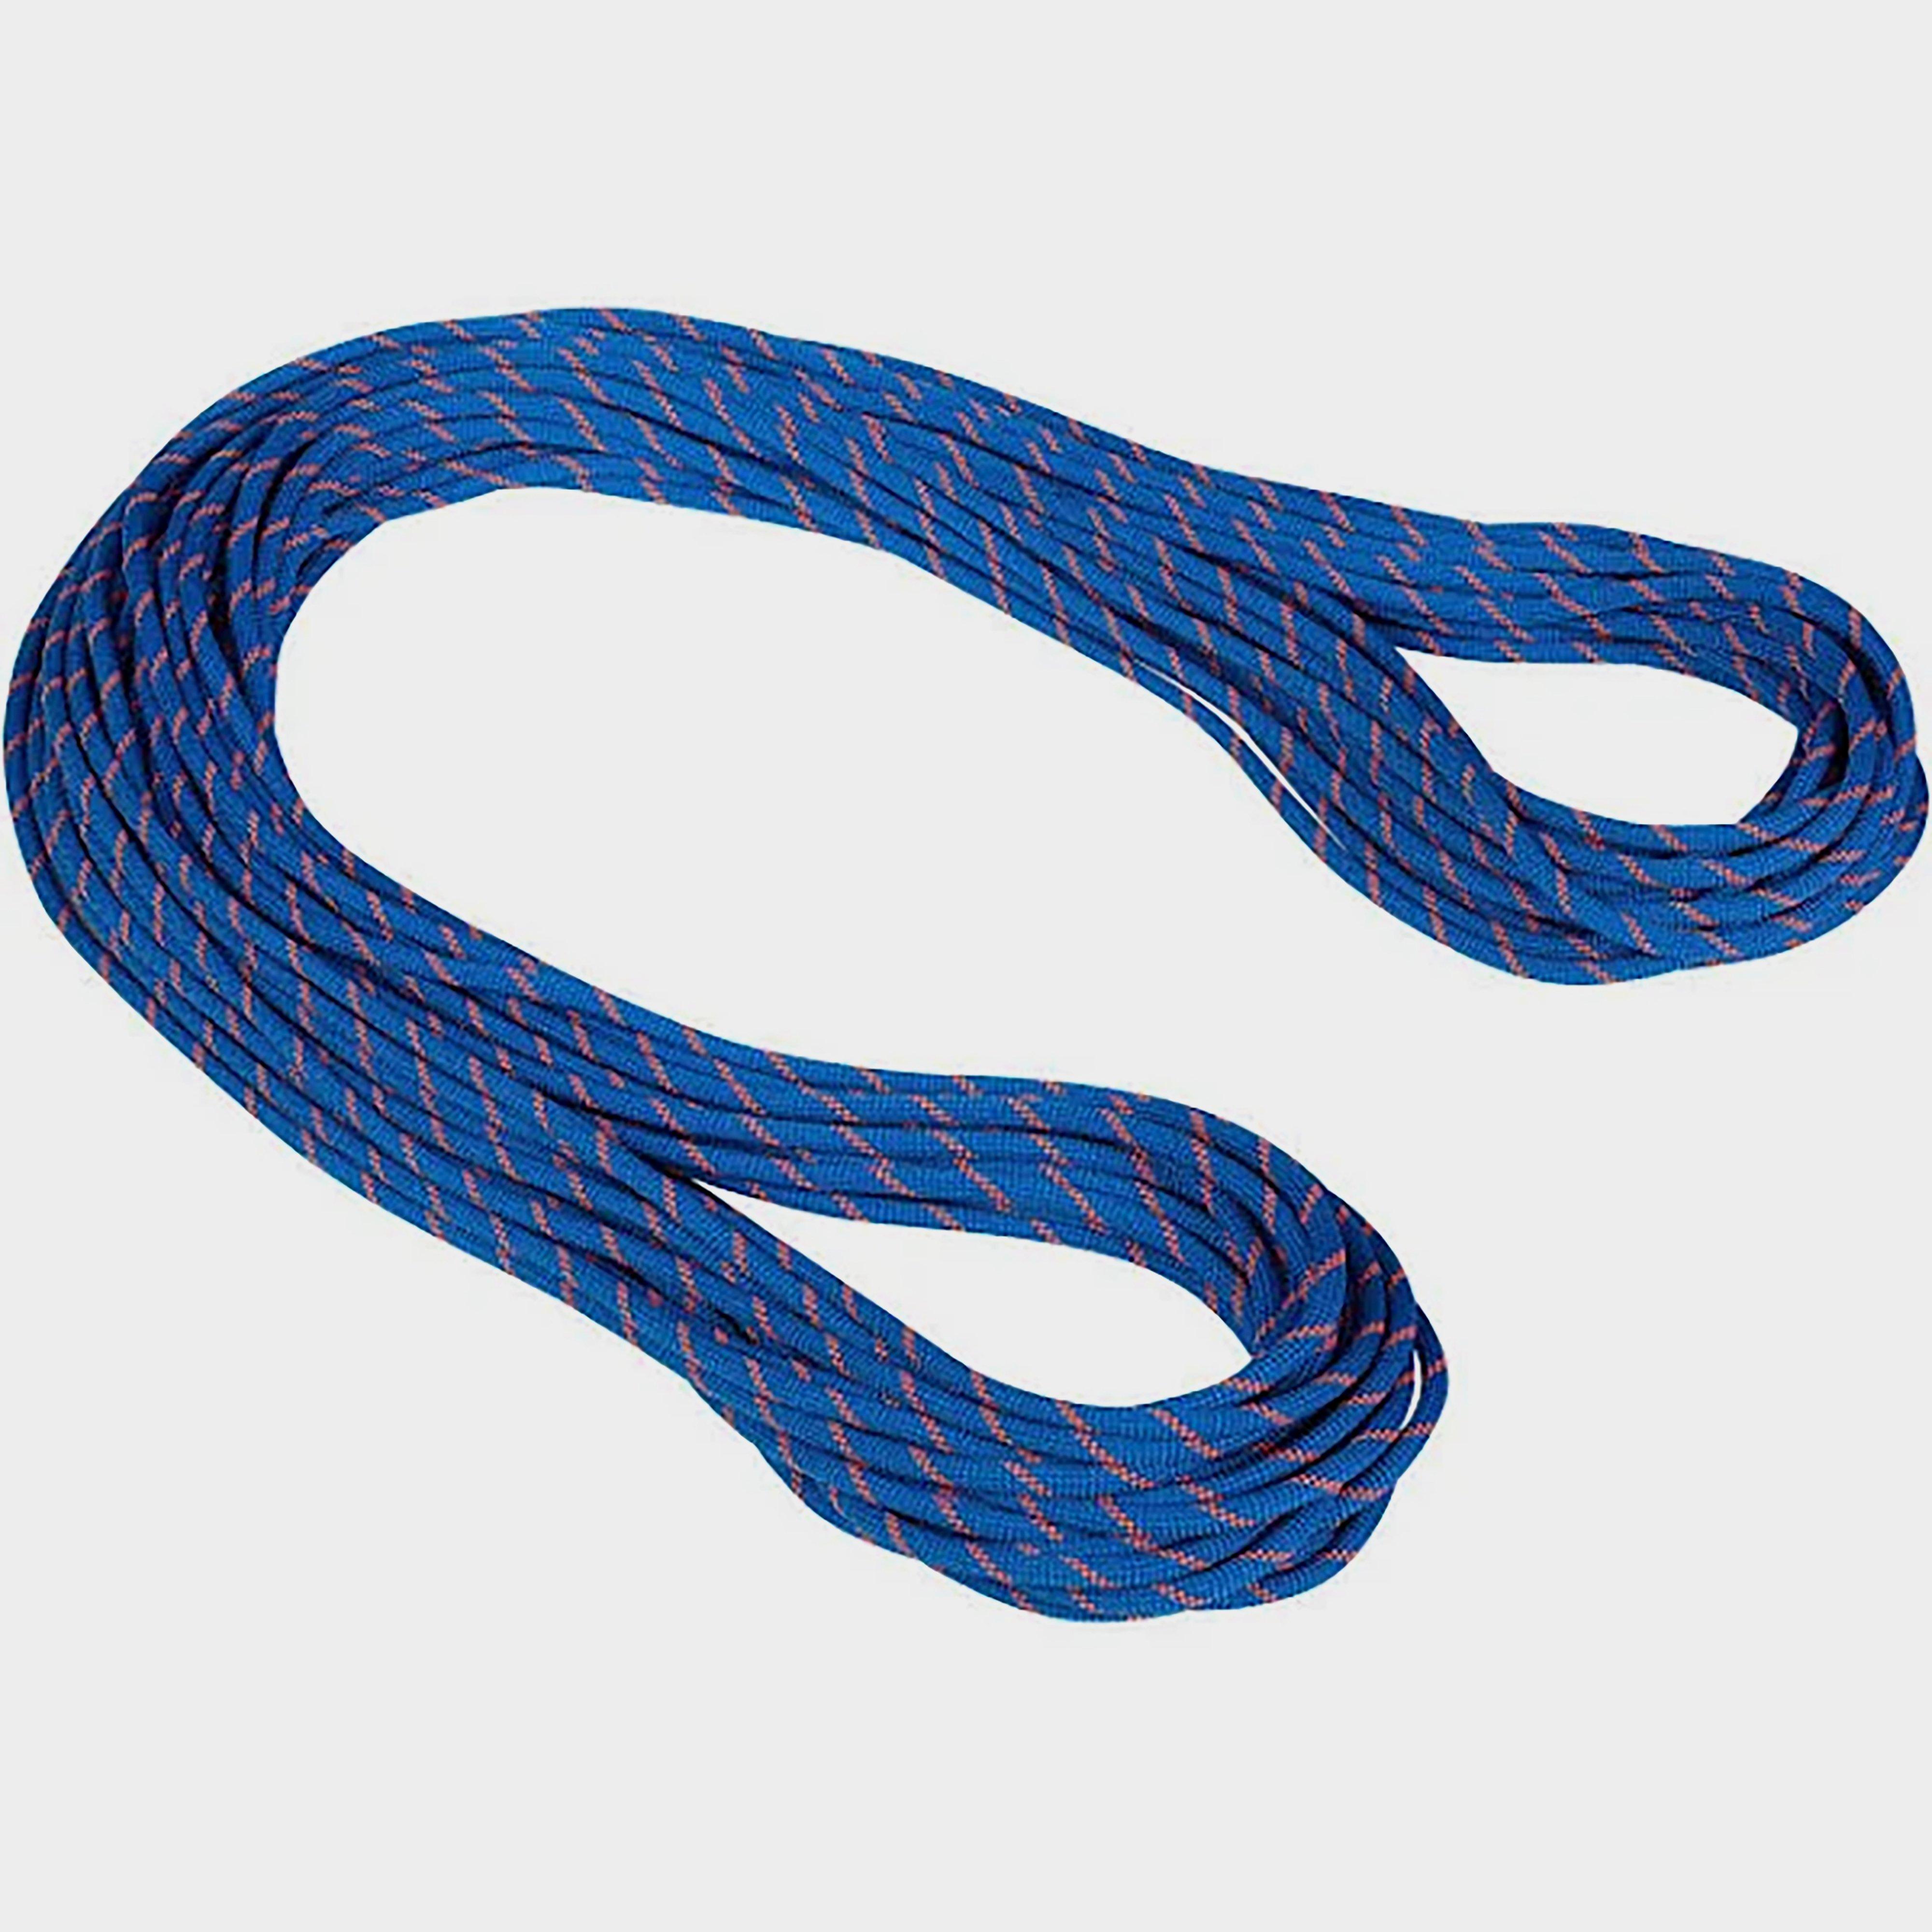  Mammut Alpine Sender Dry Rope 7.5mm - 60m, Blue